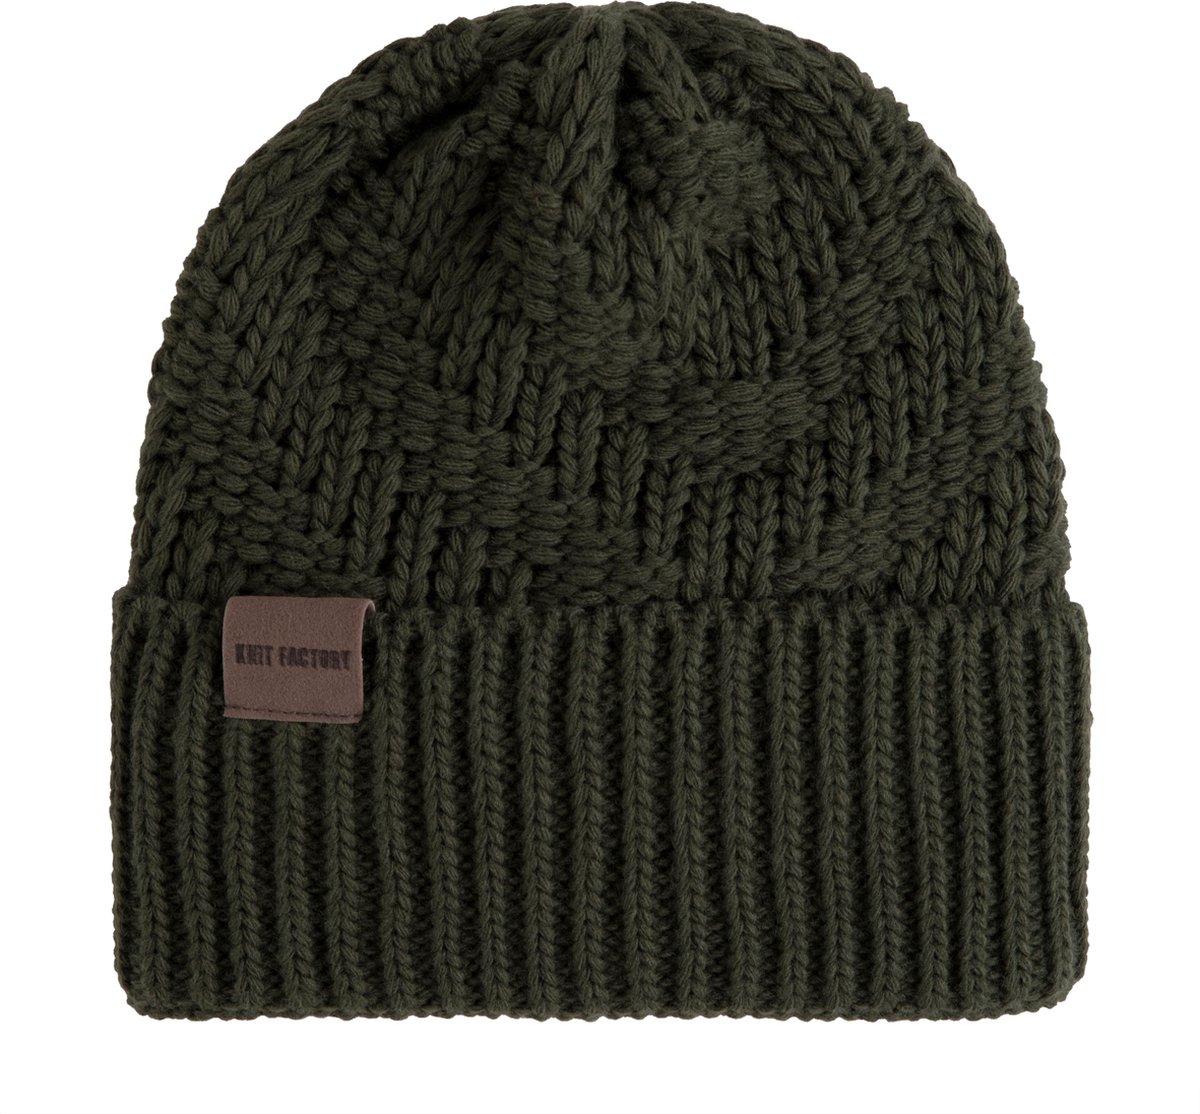 Knit Factory Sally Gebreide Muts Heren & Dames - Beanie hat - Khaki - Grofgebreid - Warme donkergroene Wintermuts - Unisex - One Size